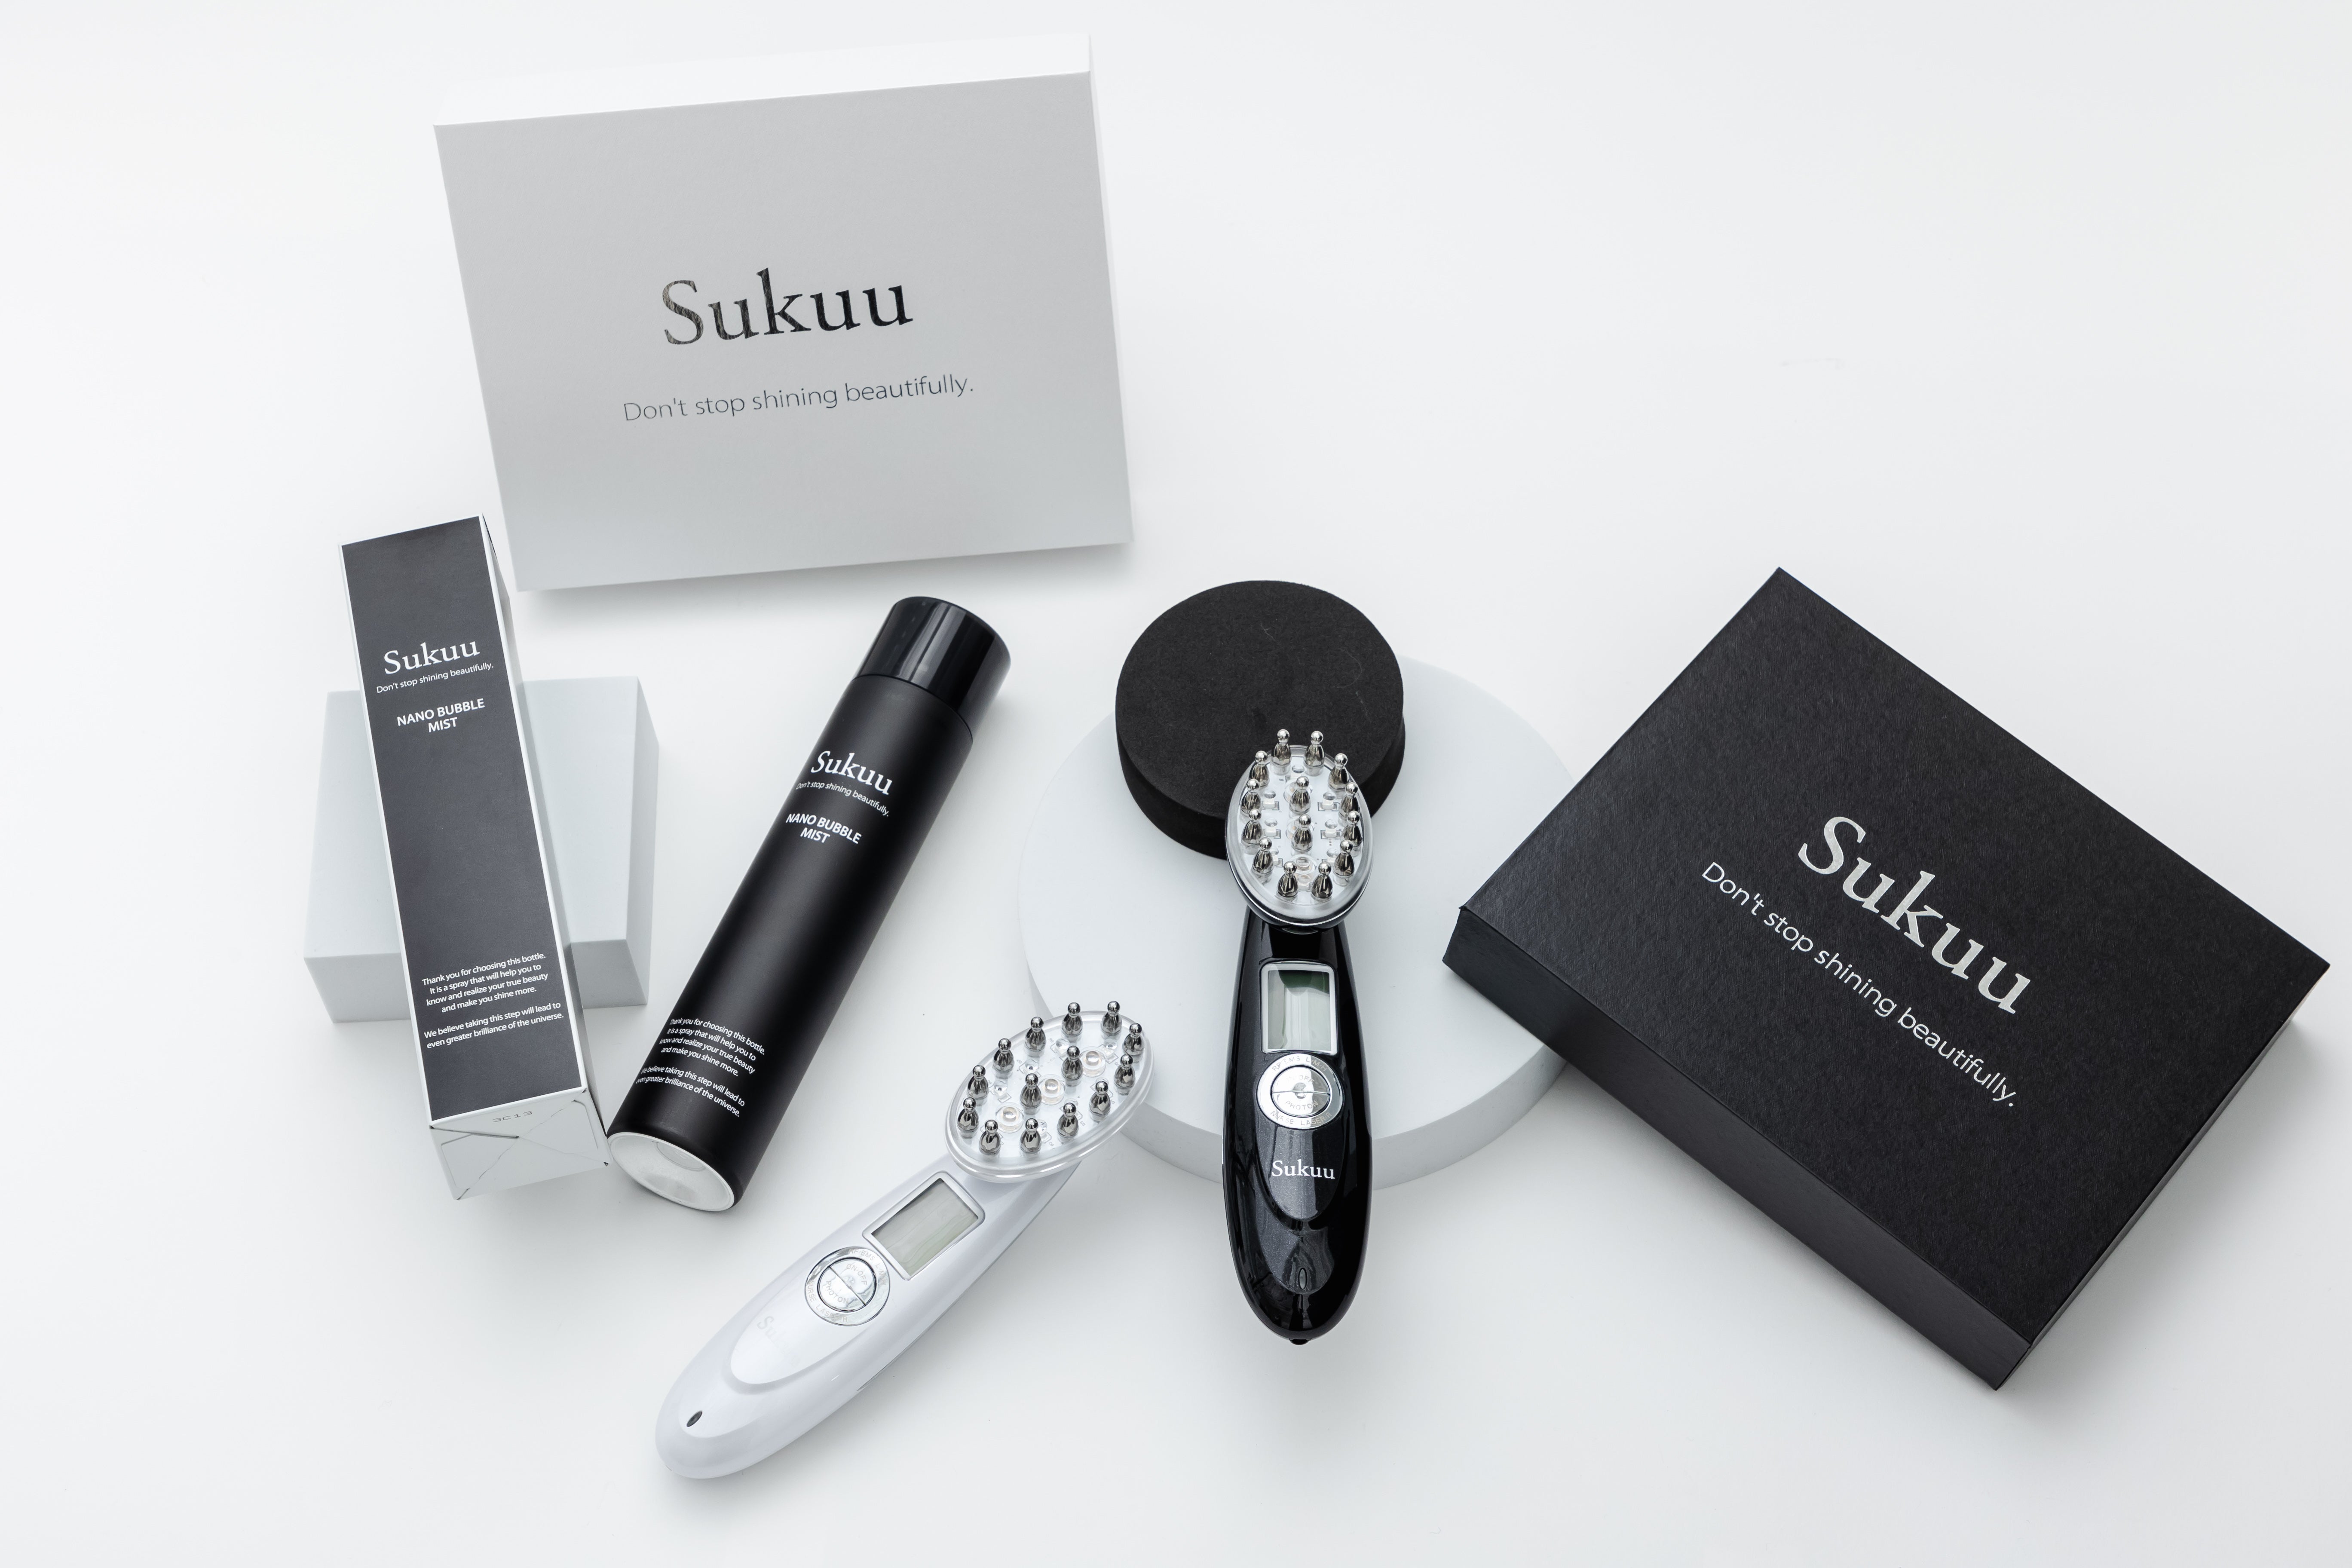 SUKUU PROJECT 美容機器、商材を通し世界中を笑顔に – Sukuu project